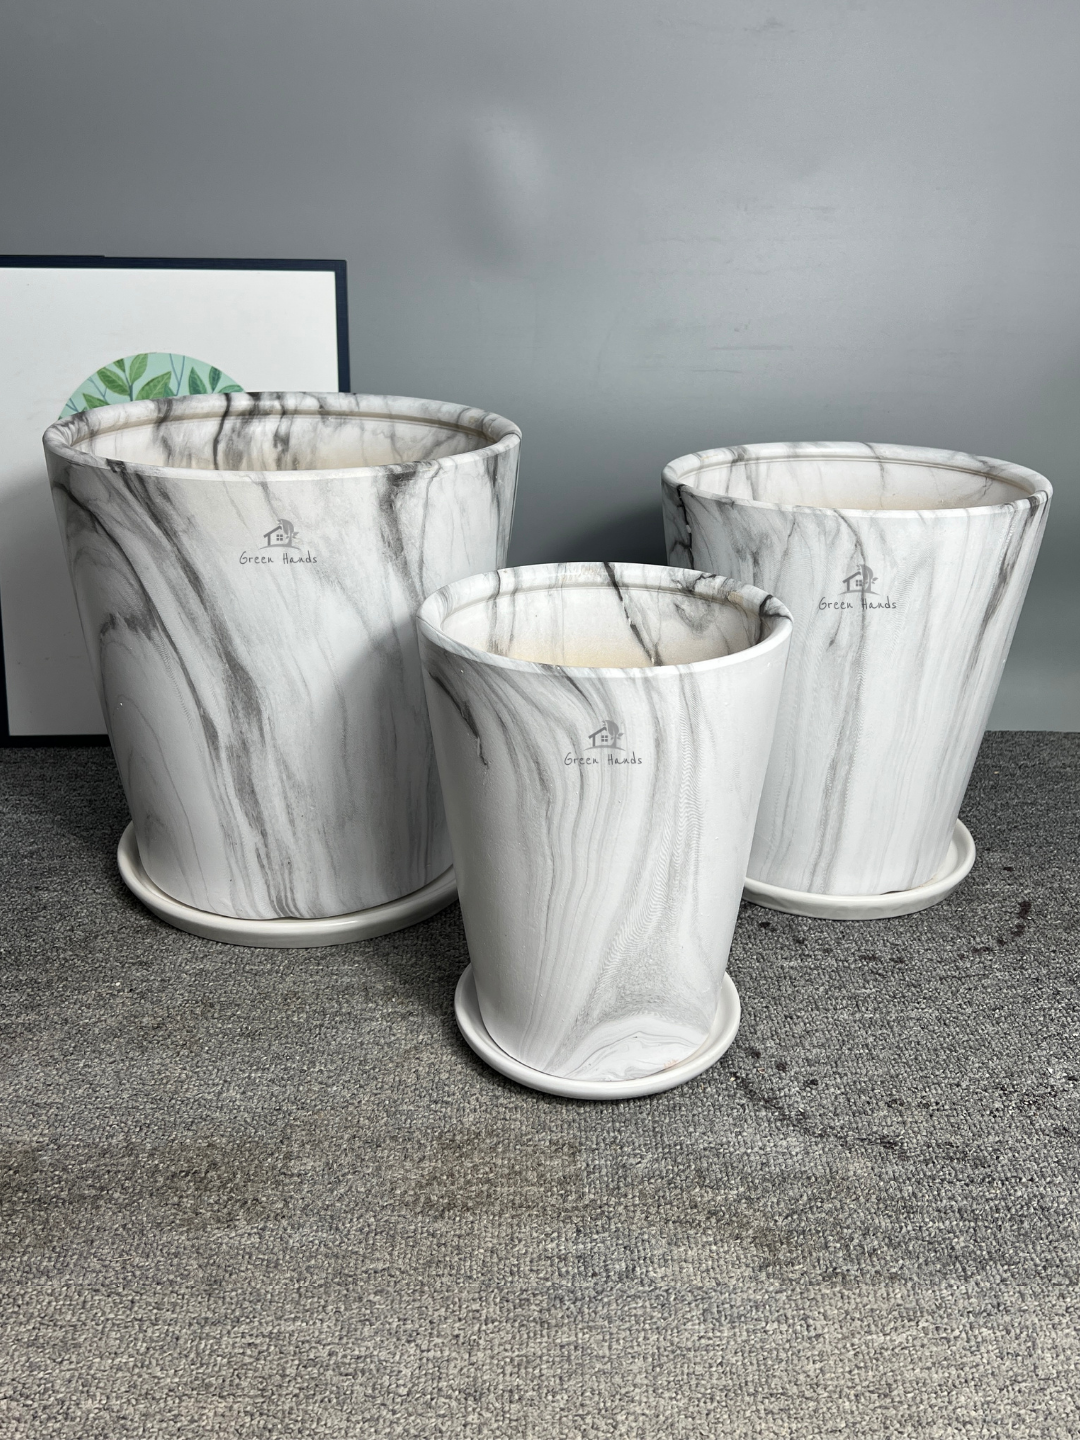 Premium Marble Ceramic Pots - The Gold Standard in UAE Home Decor